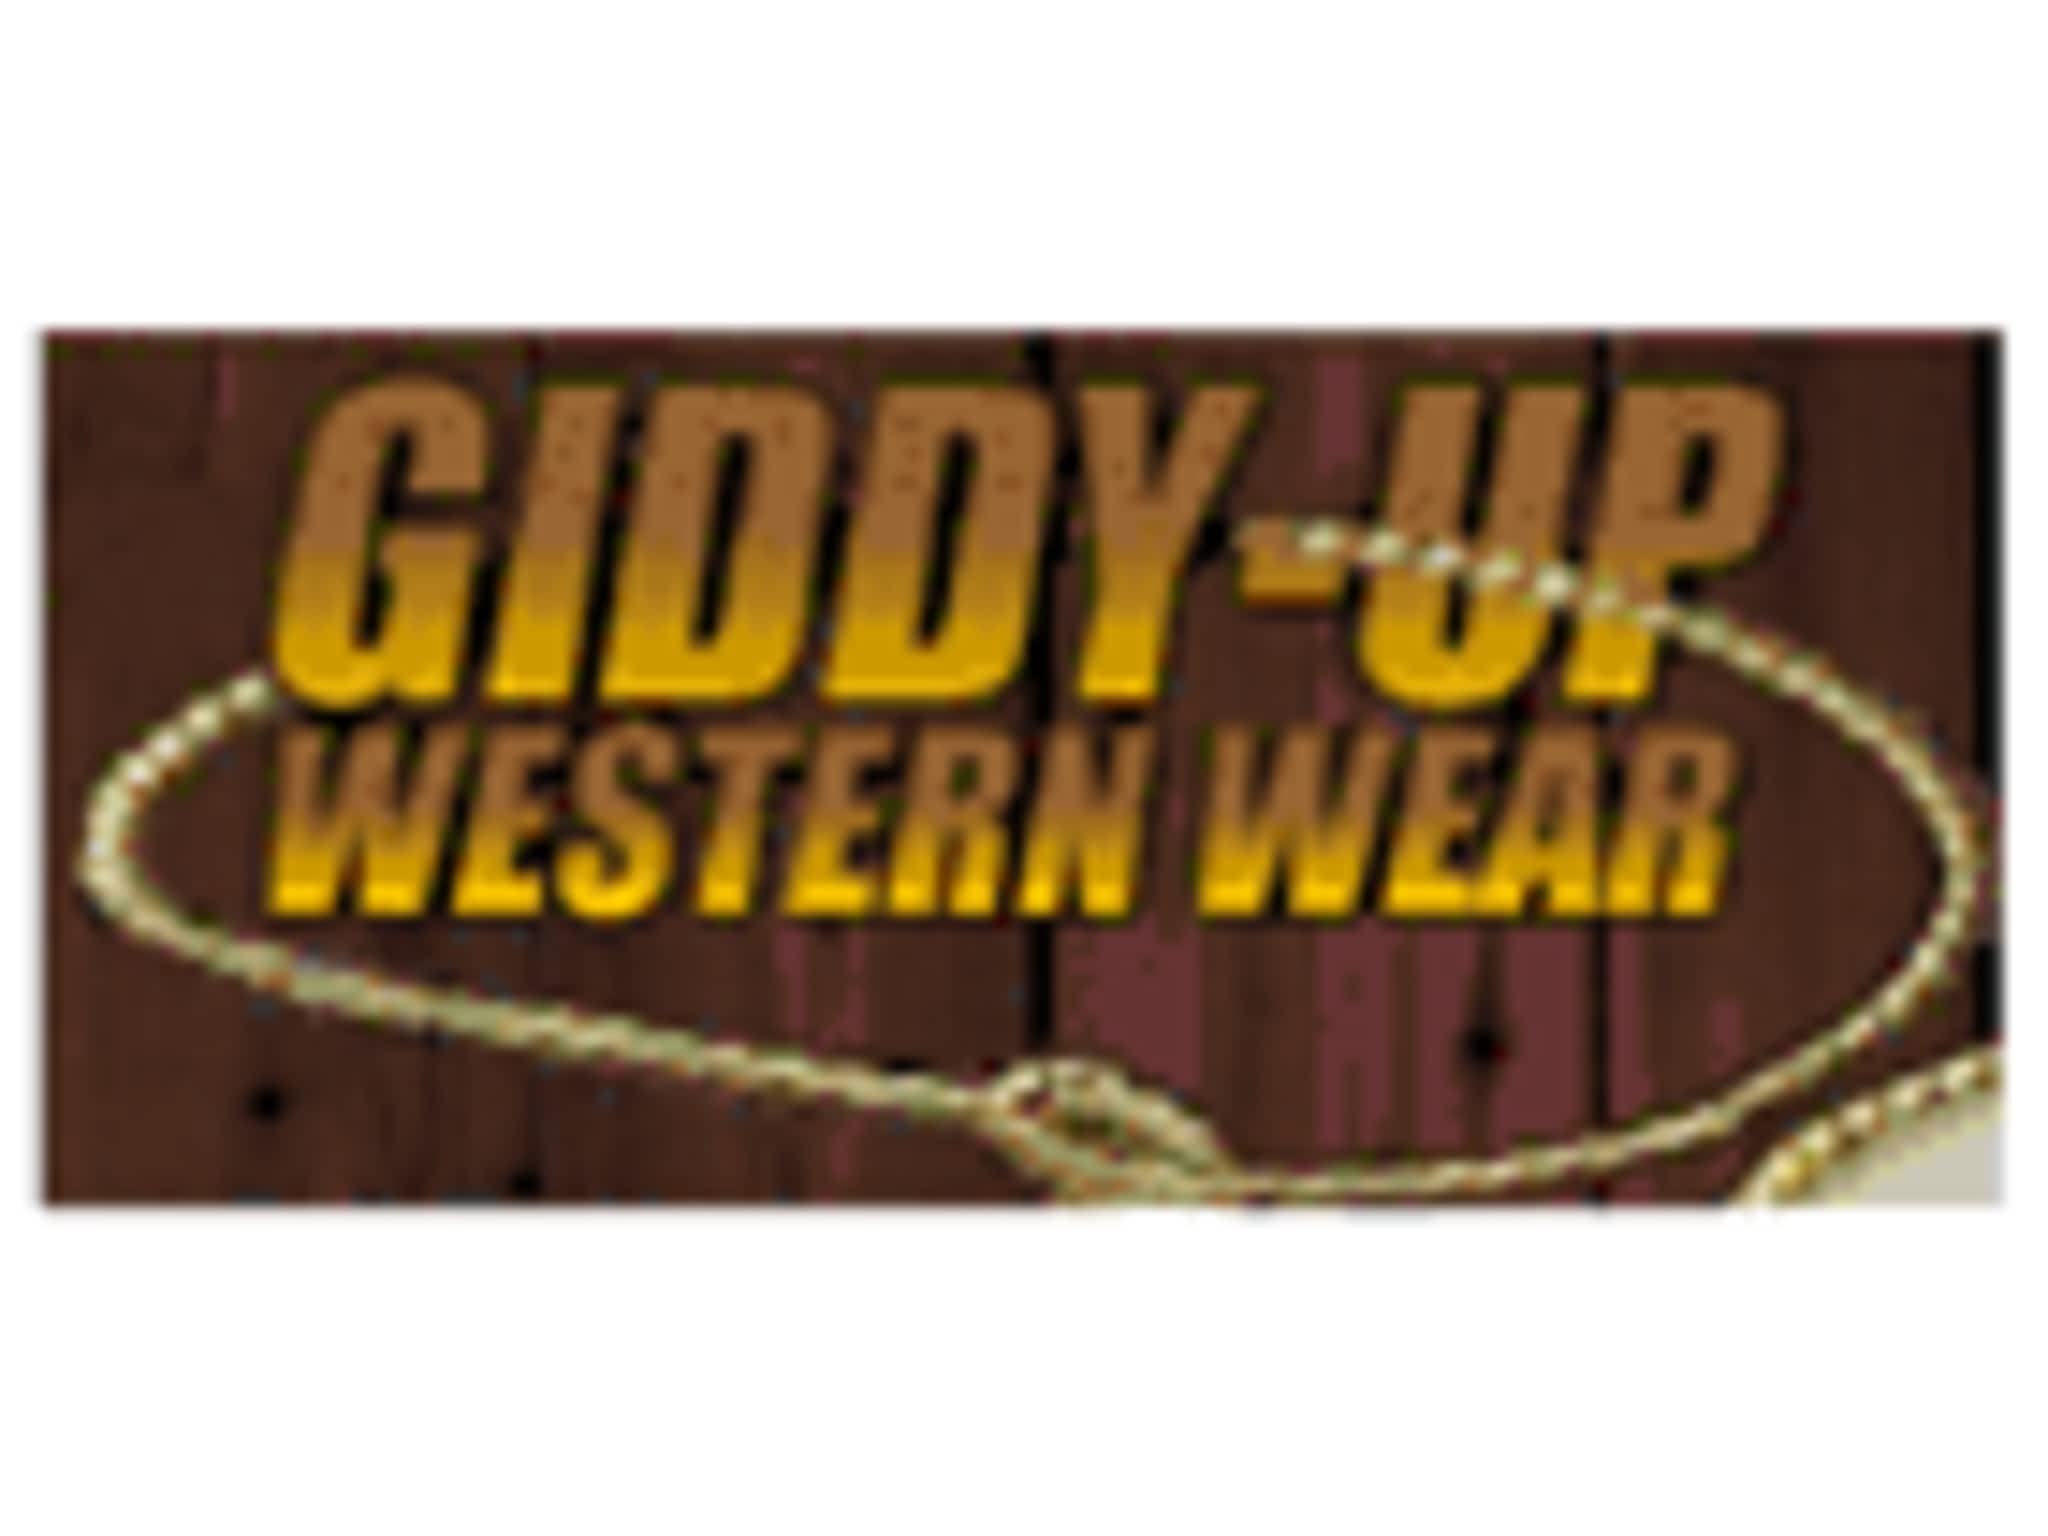 photo Giddy-Up Western Wear